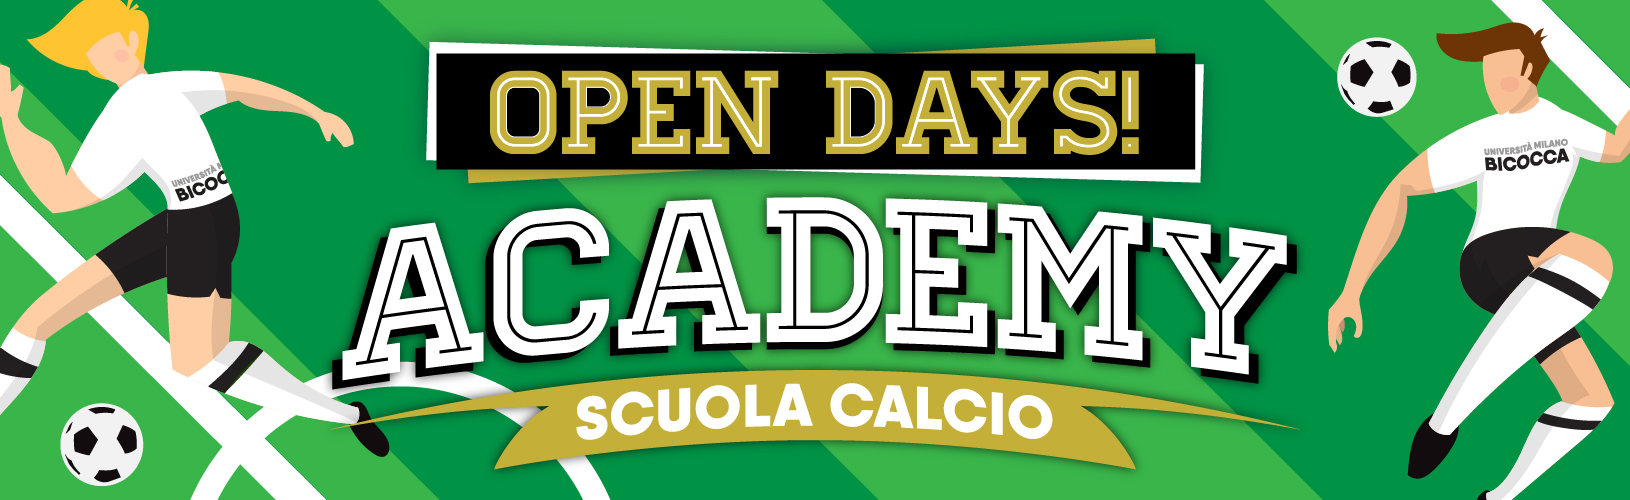 CUS Bicocca Academy • Scuola Calcio • Open Days